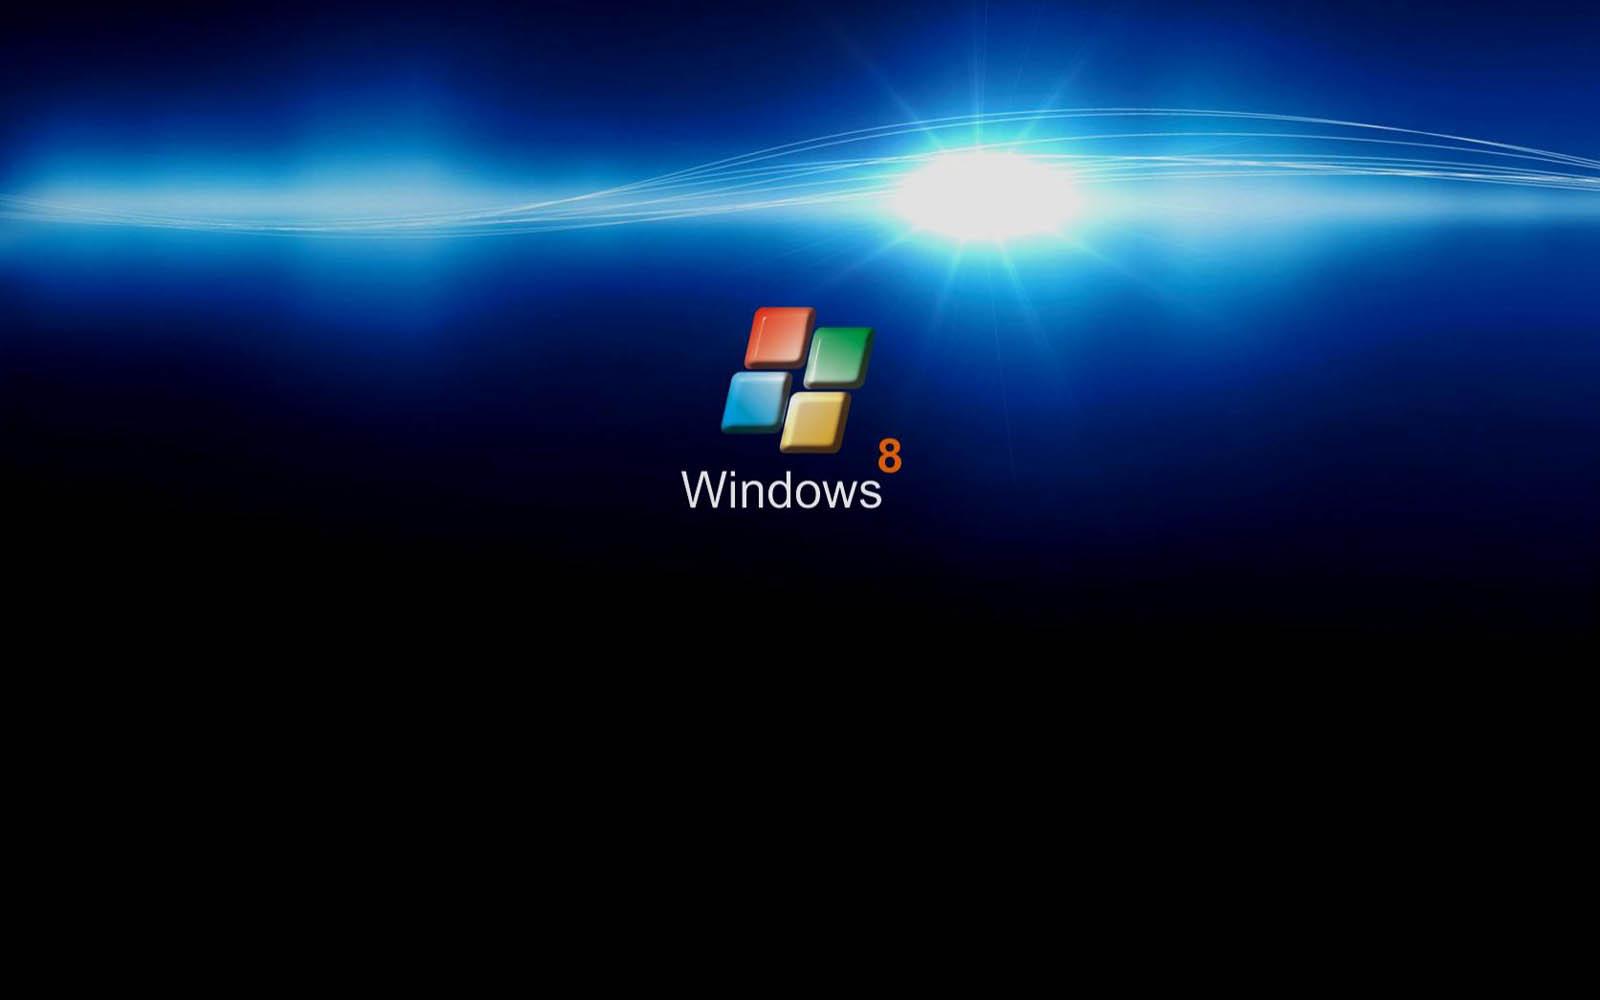 wallpaper: Windows 8 Desktop Wallpaper and Background